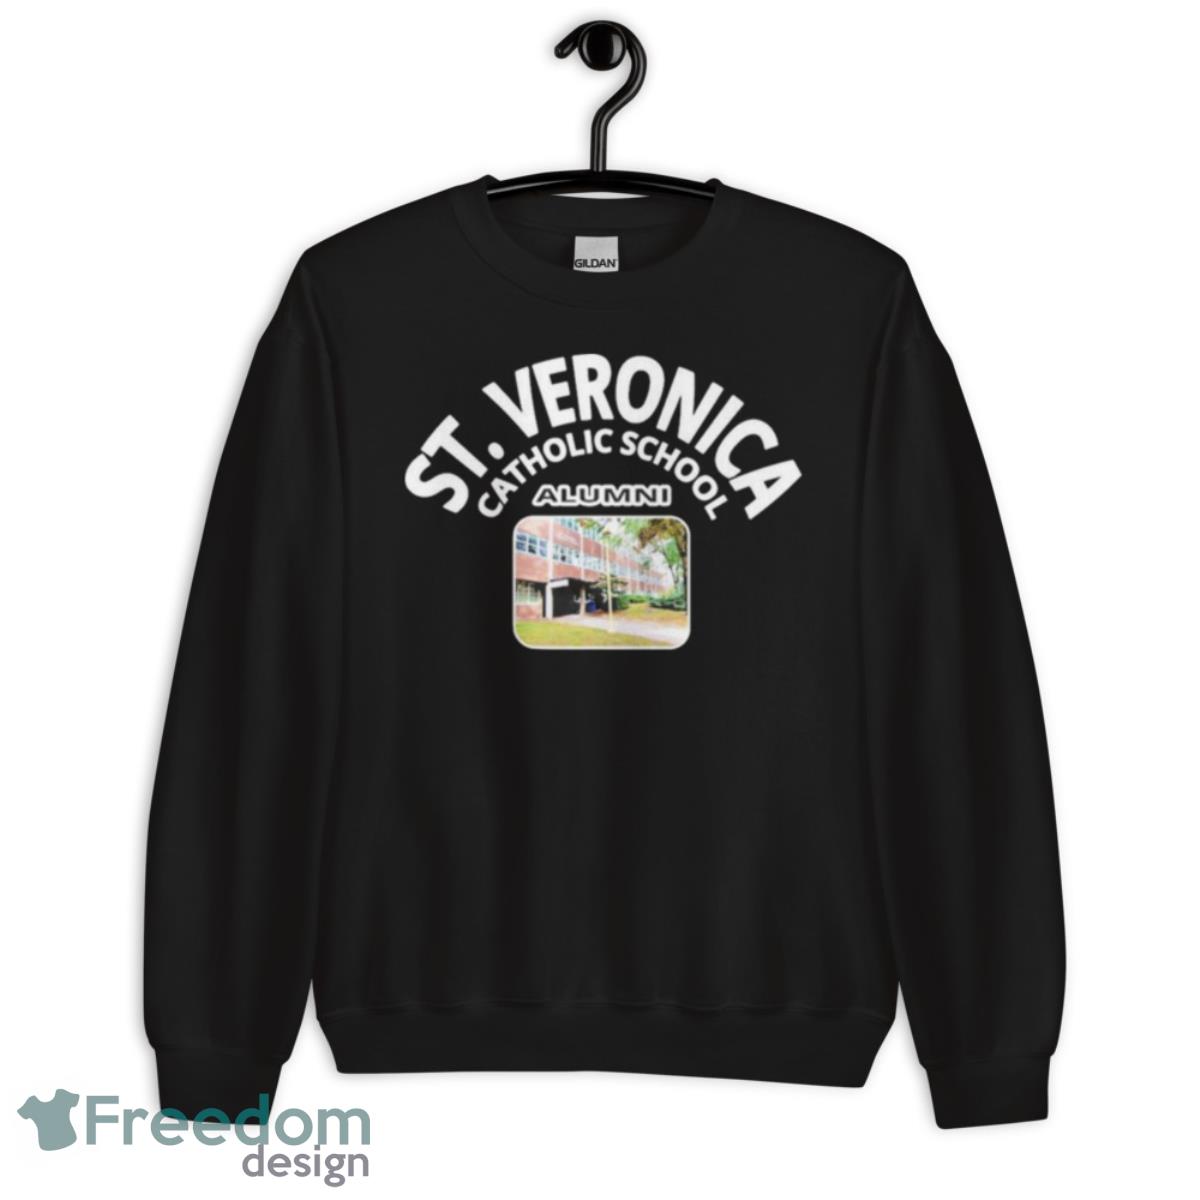 St Veronica Catholic School Alumni Shirt - Freedomdesign